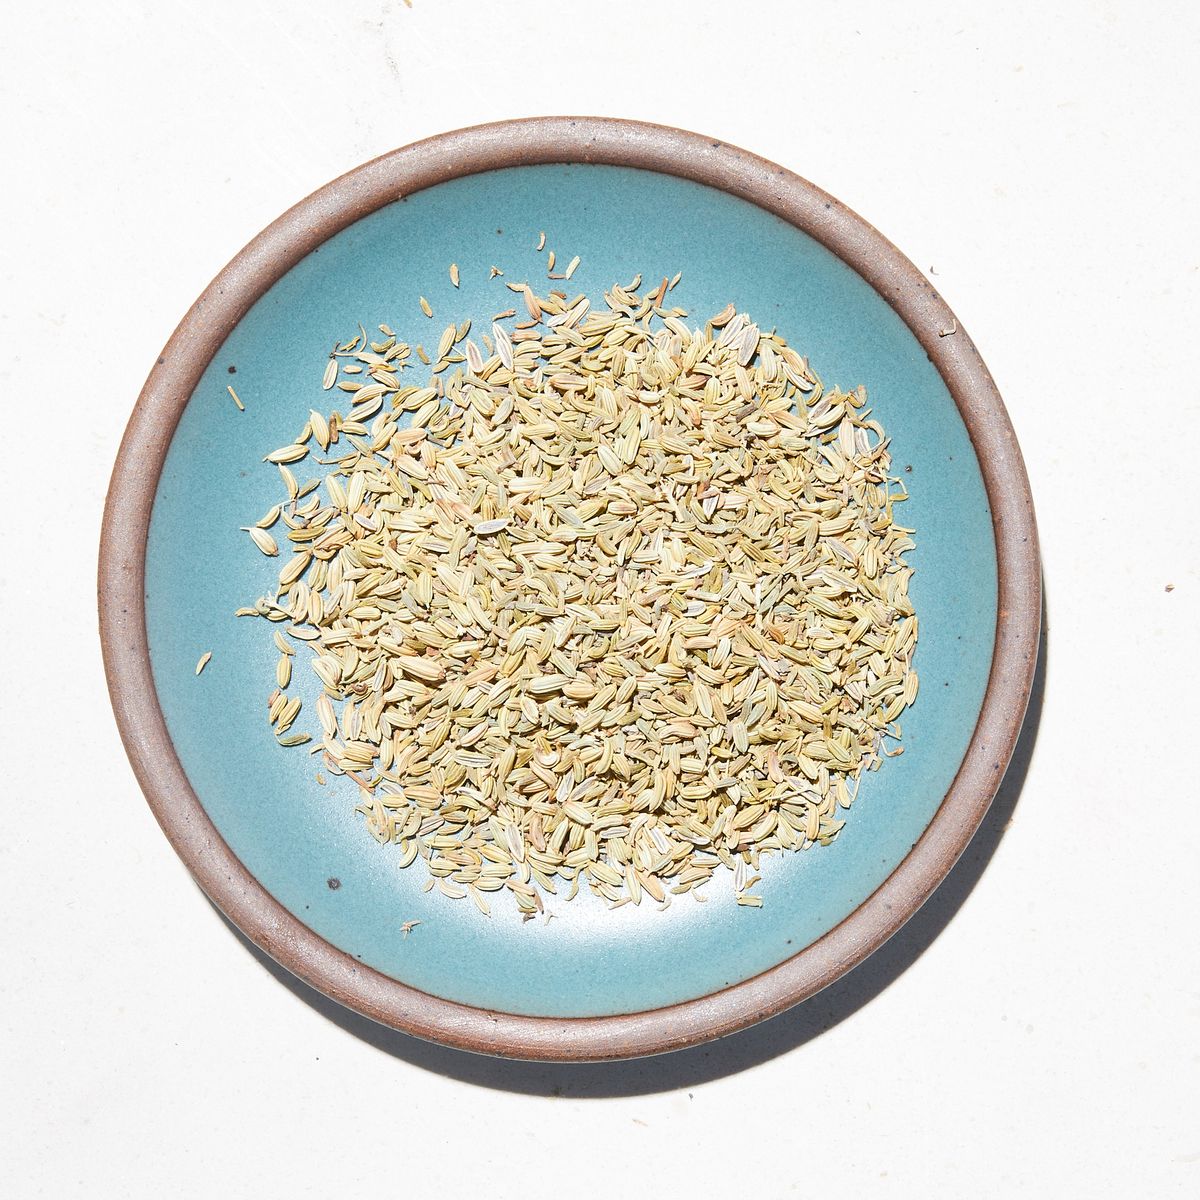 Fennel seeds on Secret Beach plate